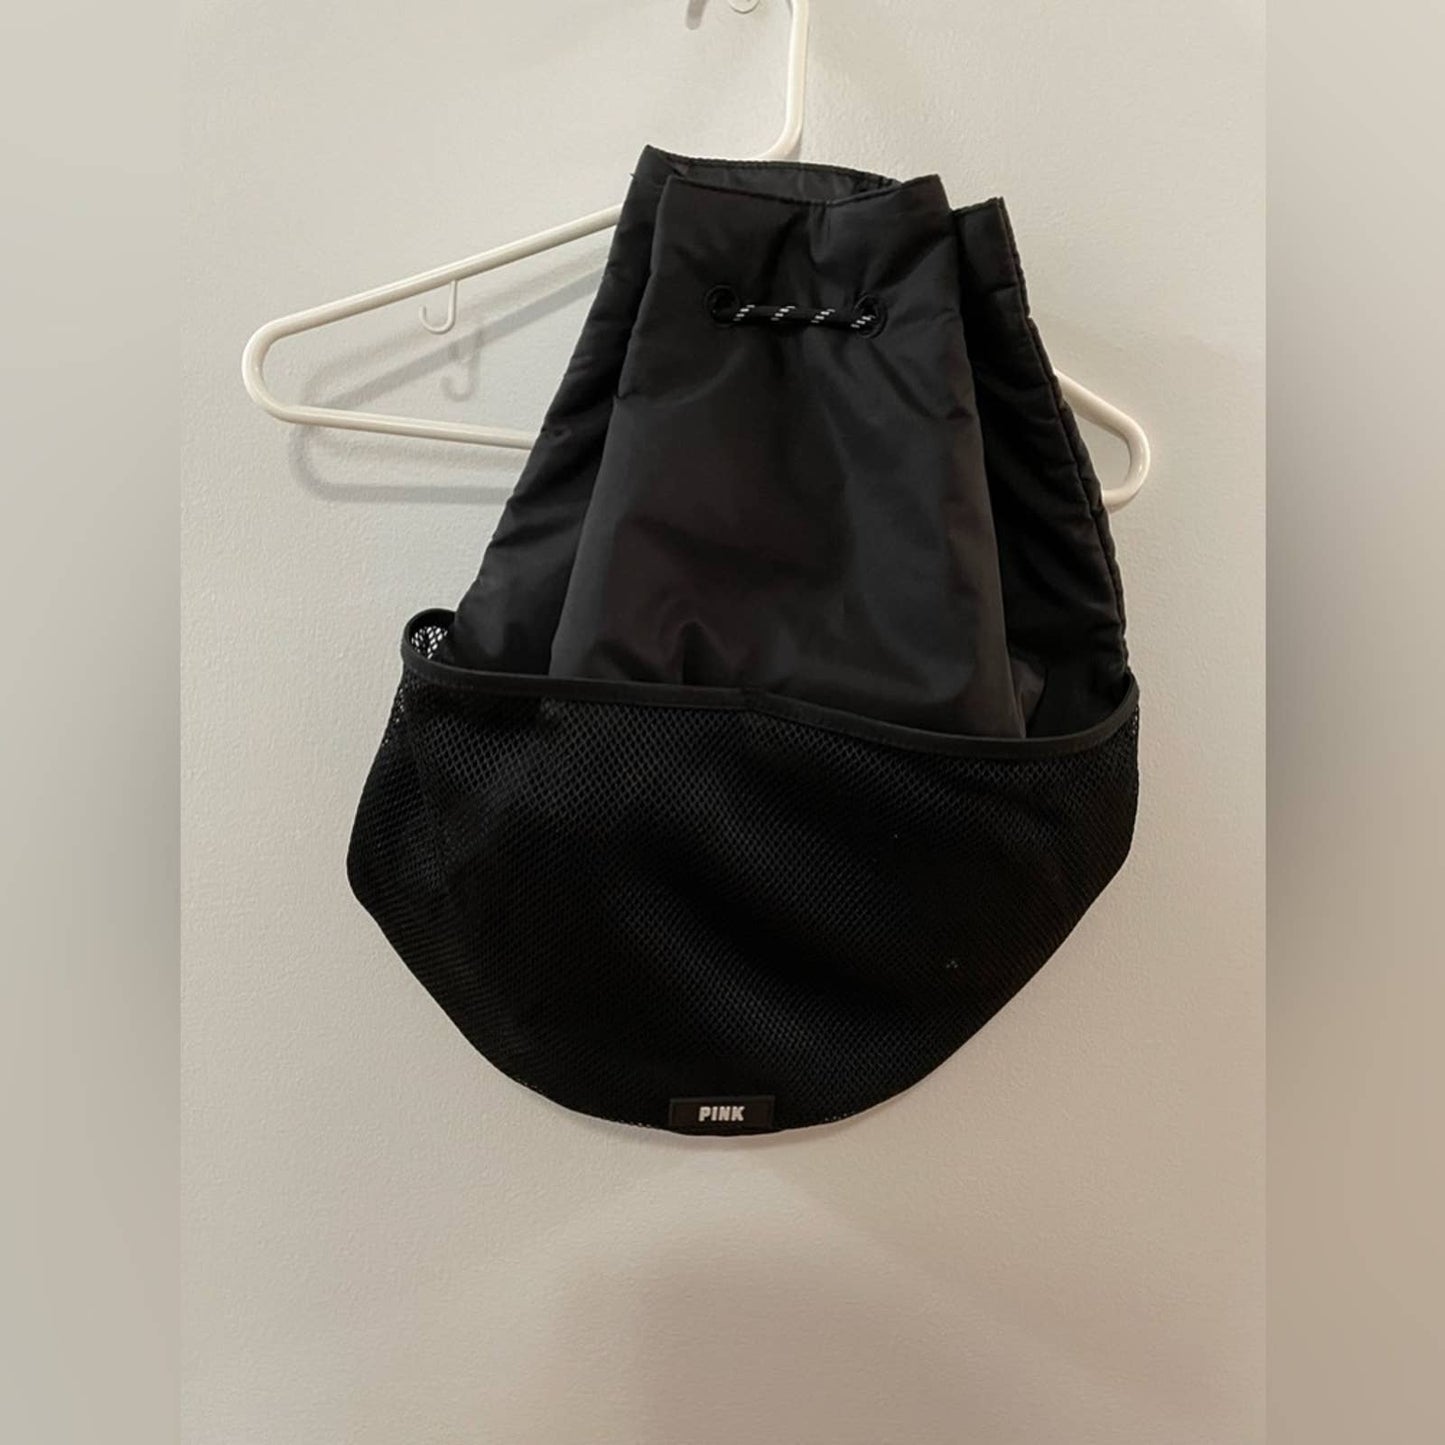 Victoria’s Secret Pink Nylon Drawstring Bag